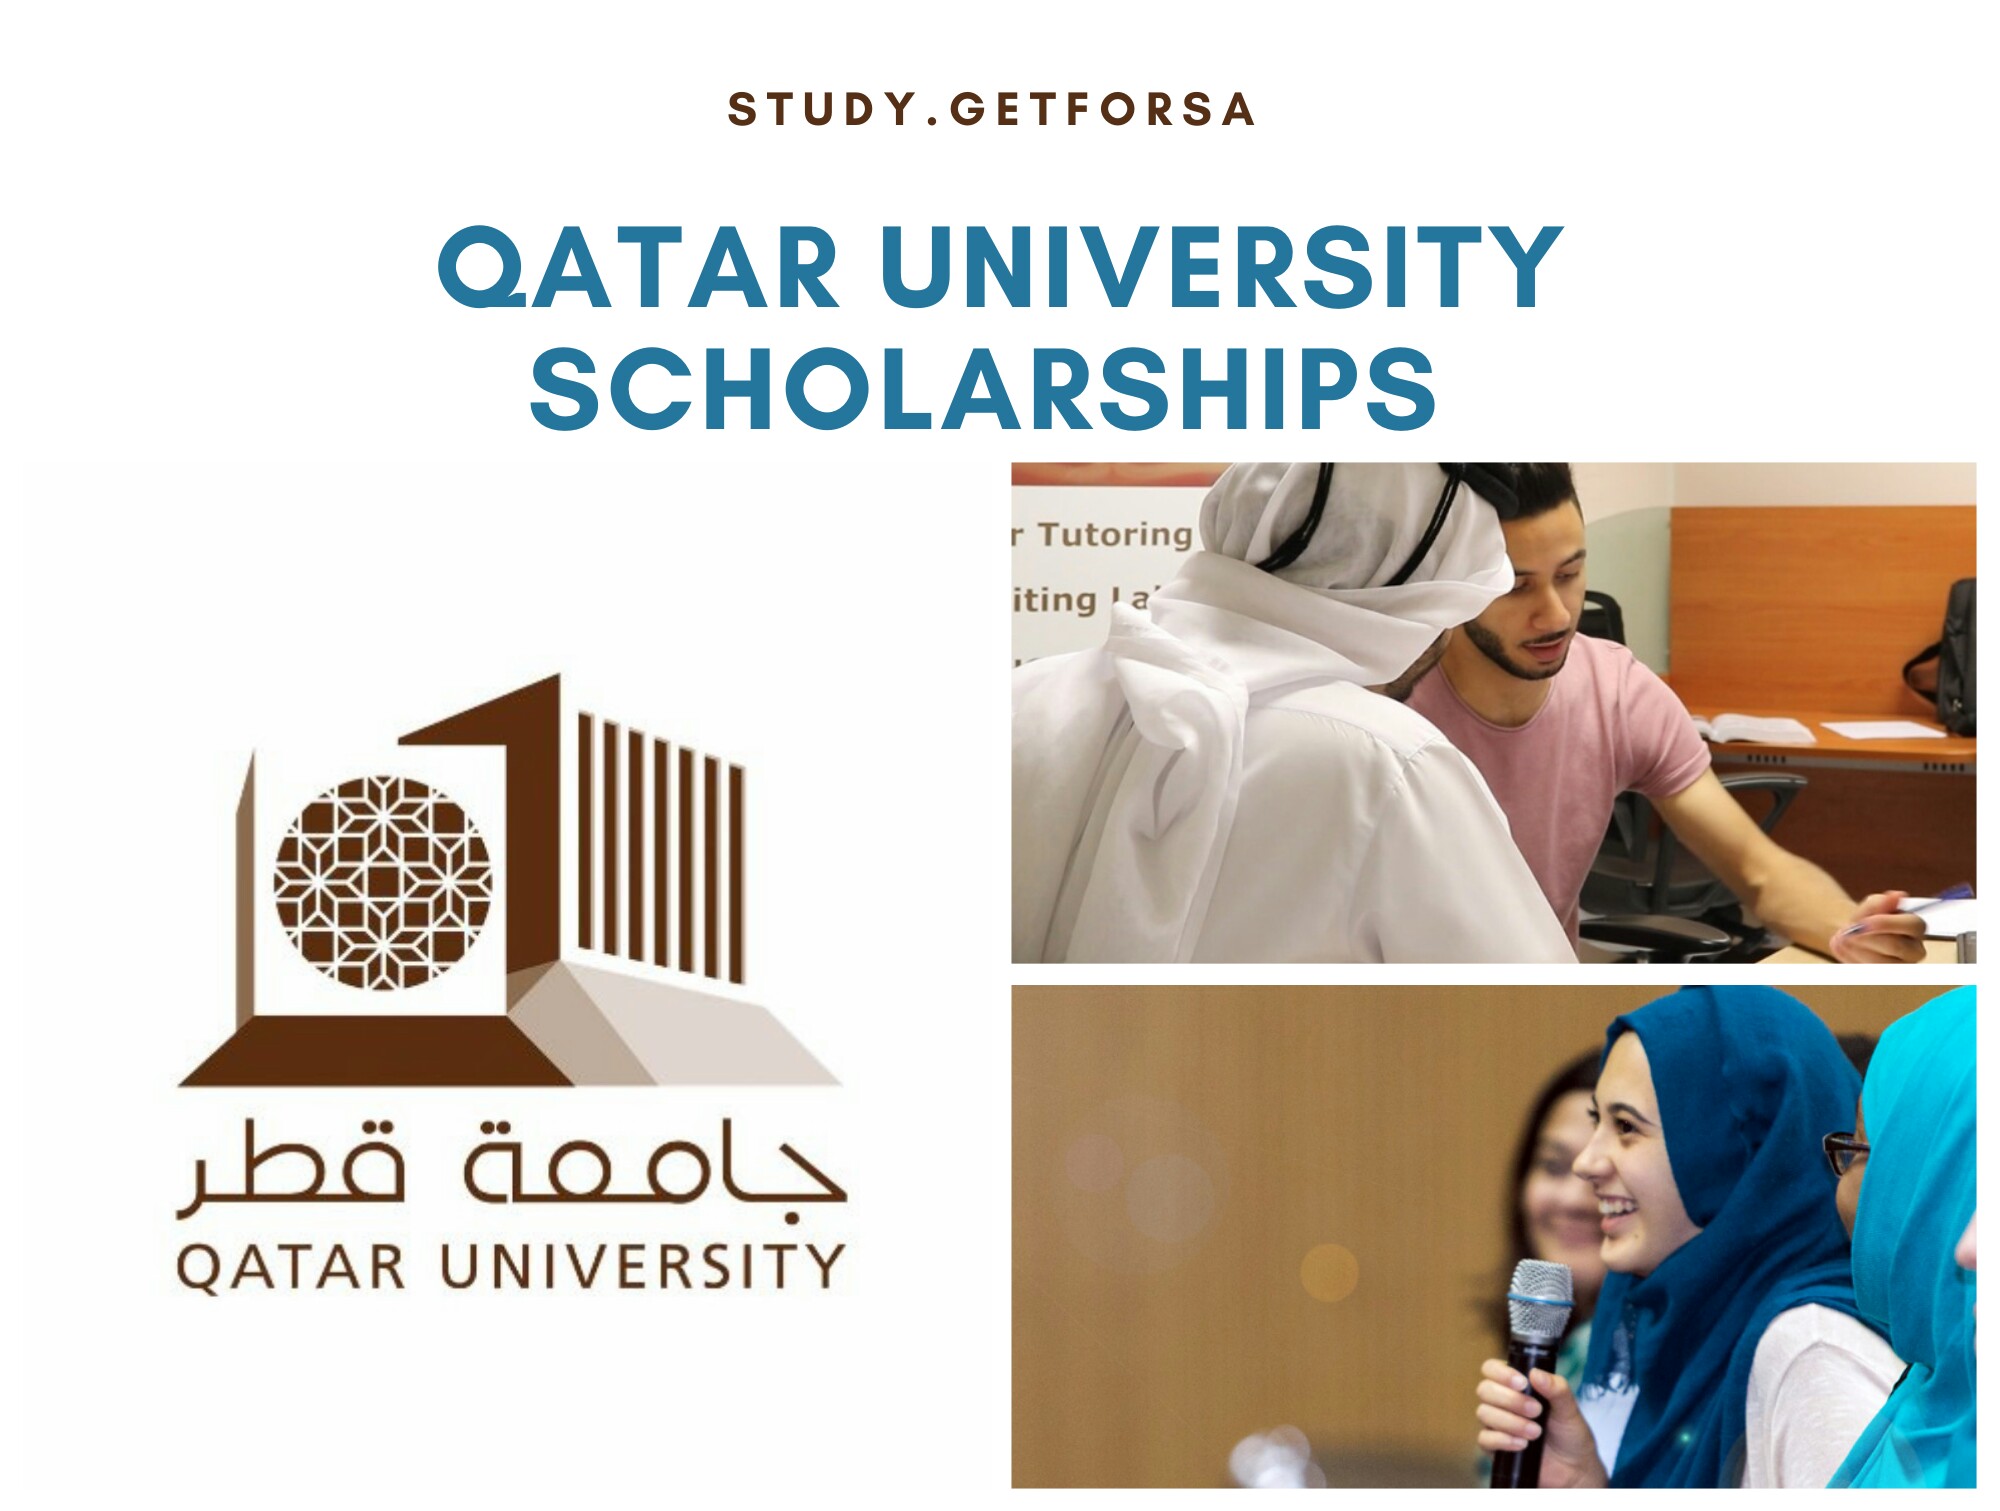 phd in qatar with scholarship